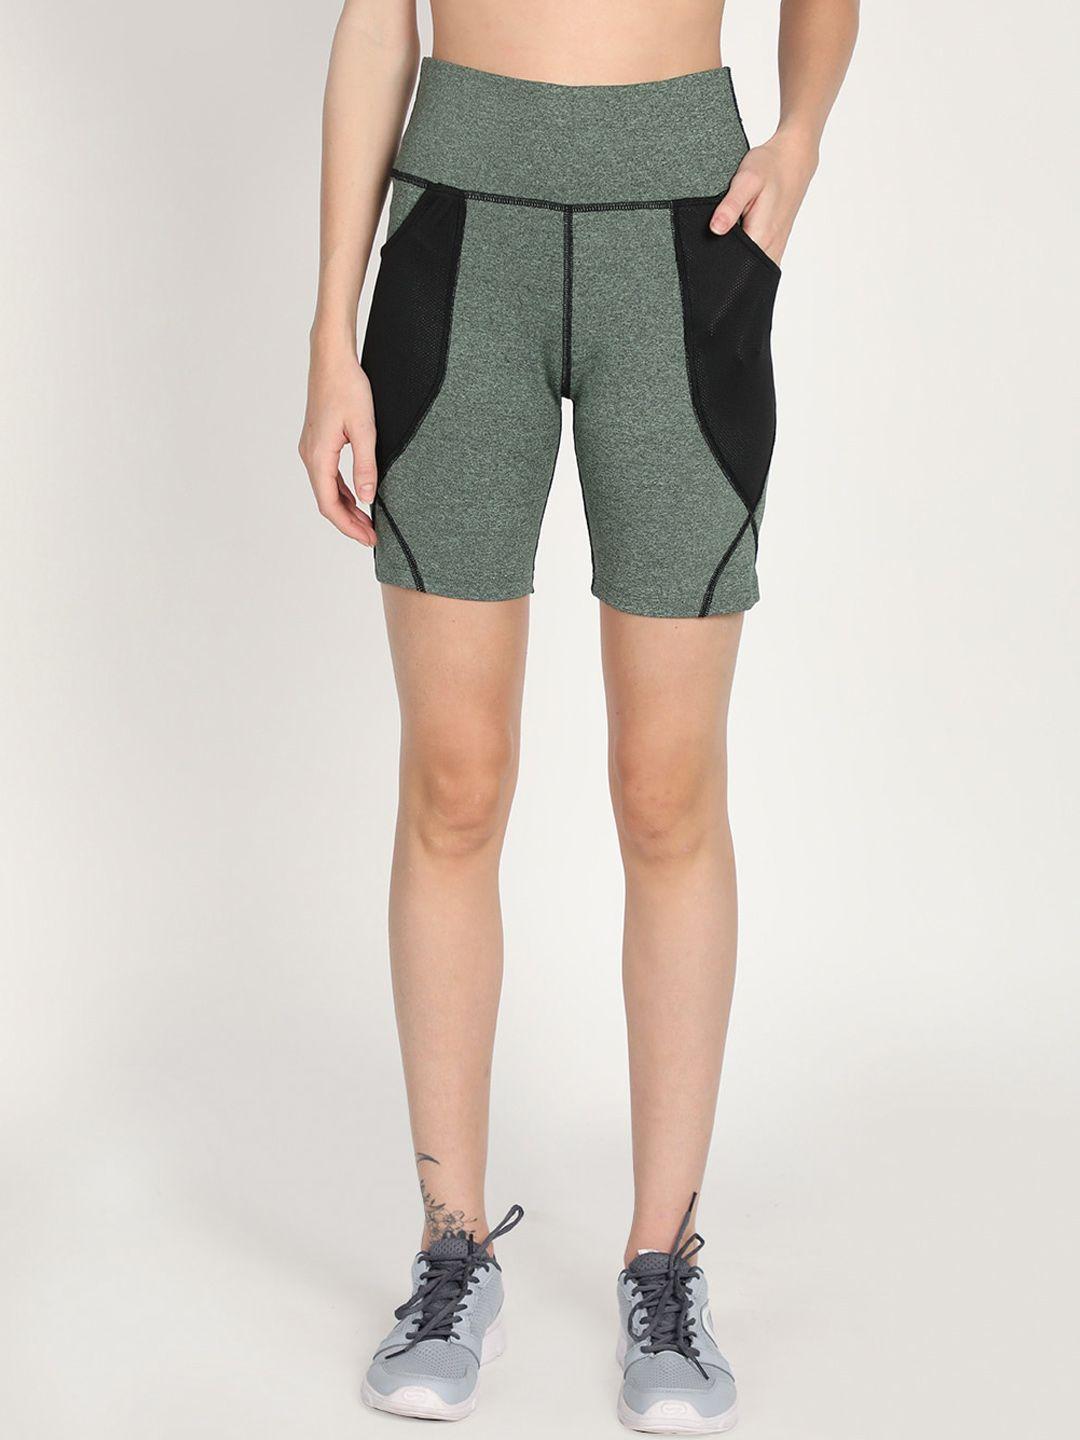 chkokko-women-colourblocked-slip-on-slim-fit-cycling-sports-shorts